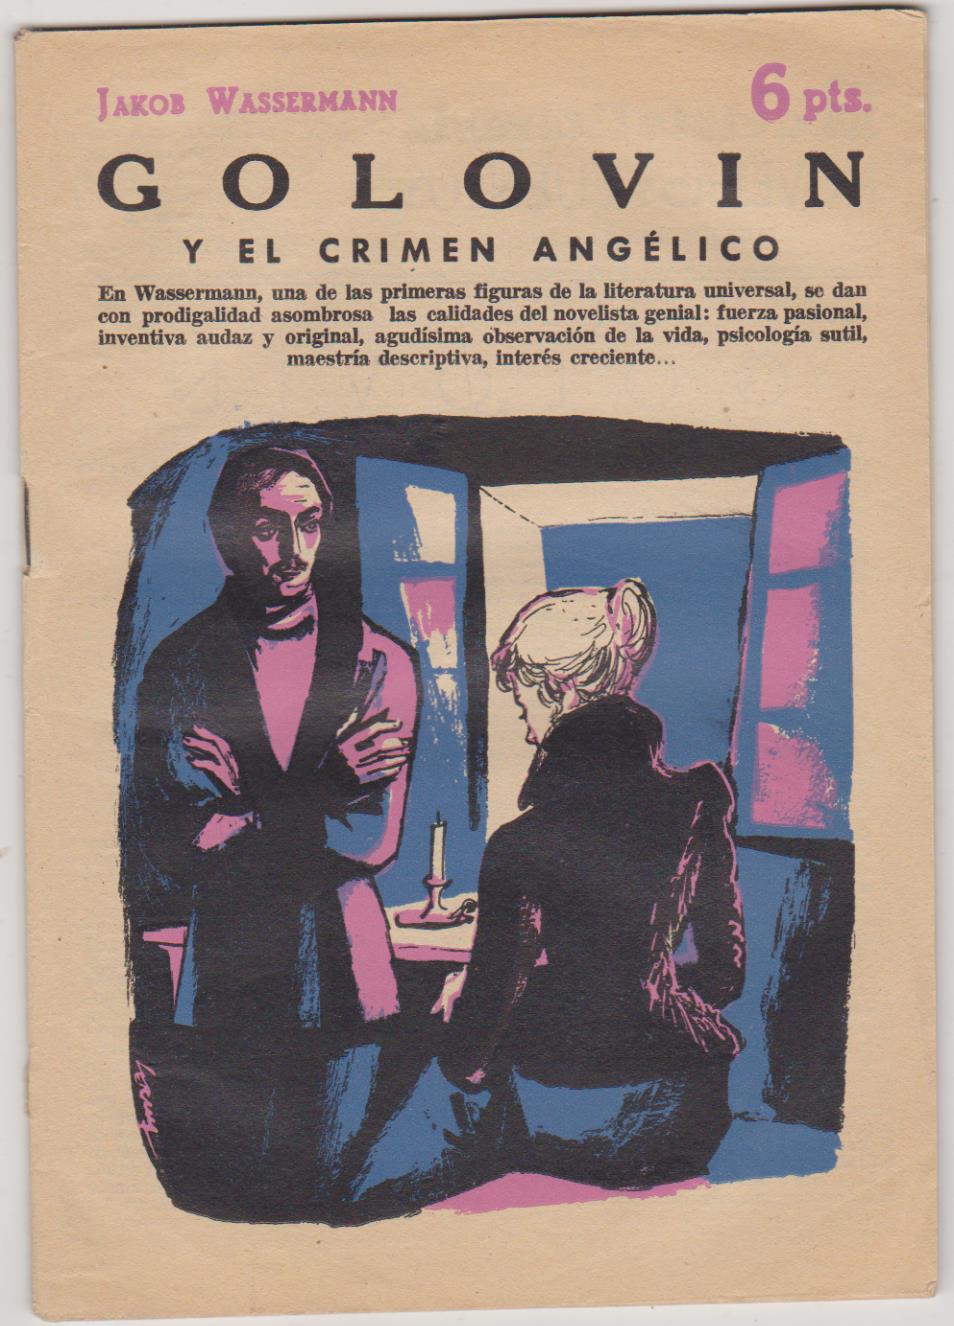 Revista Literaria nº 1490. Jakob Wasserman. Goliovin y El crimen angélico. Año 1969